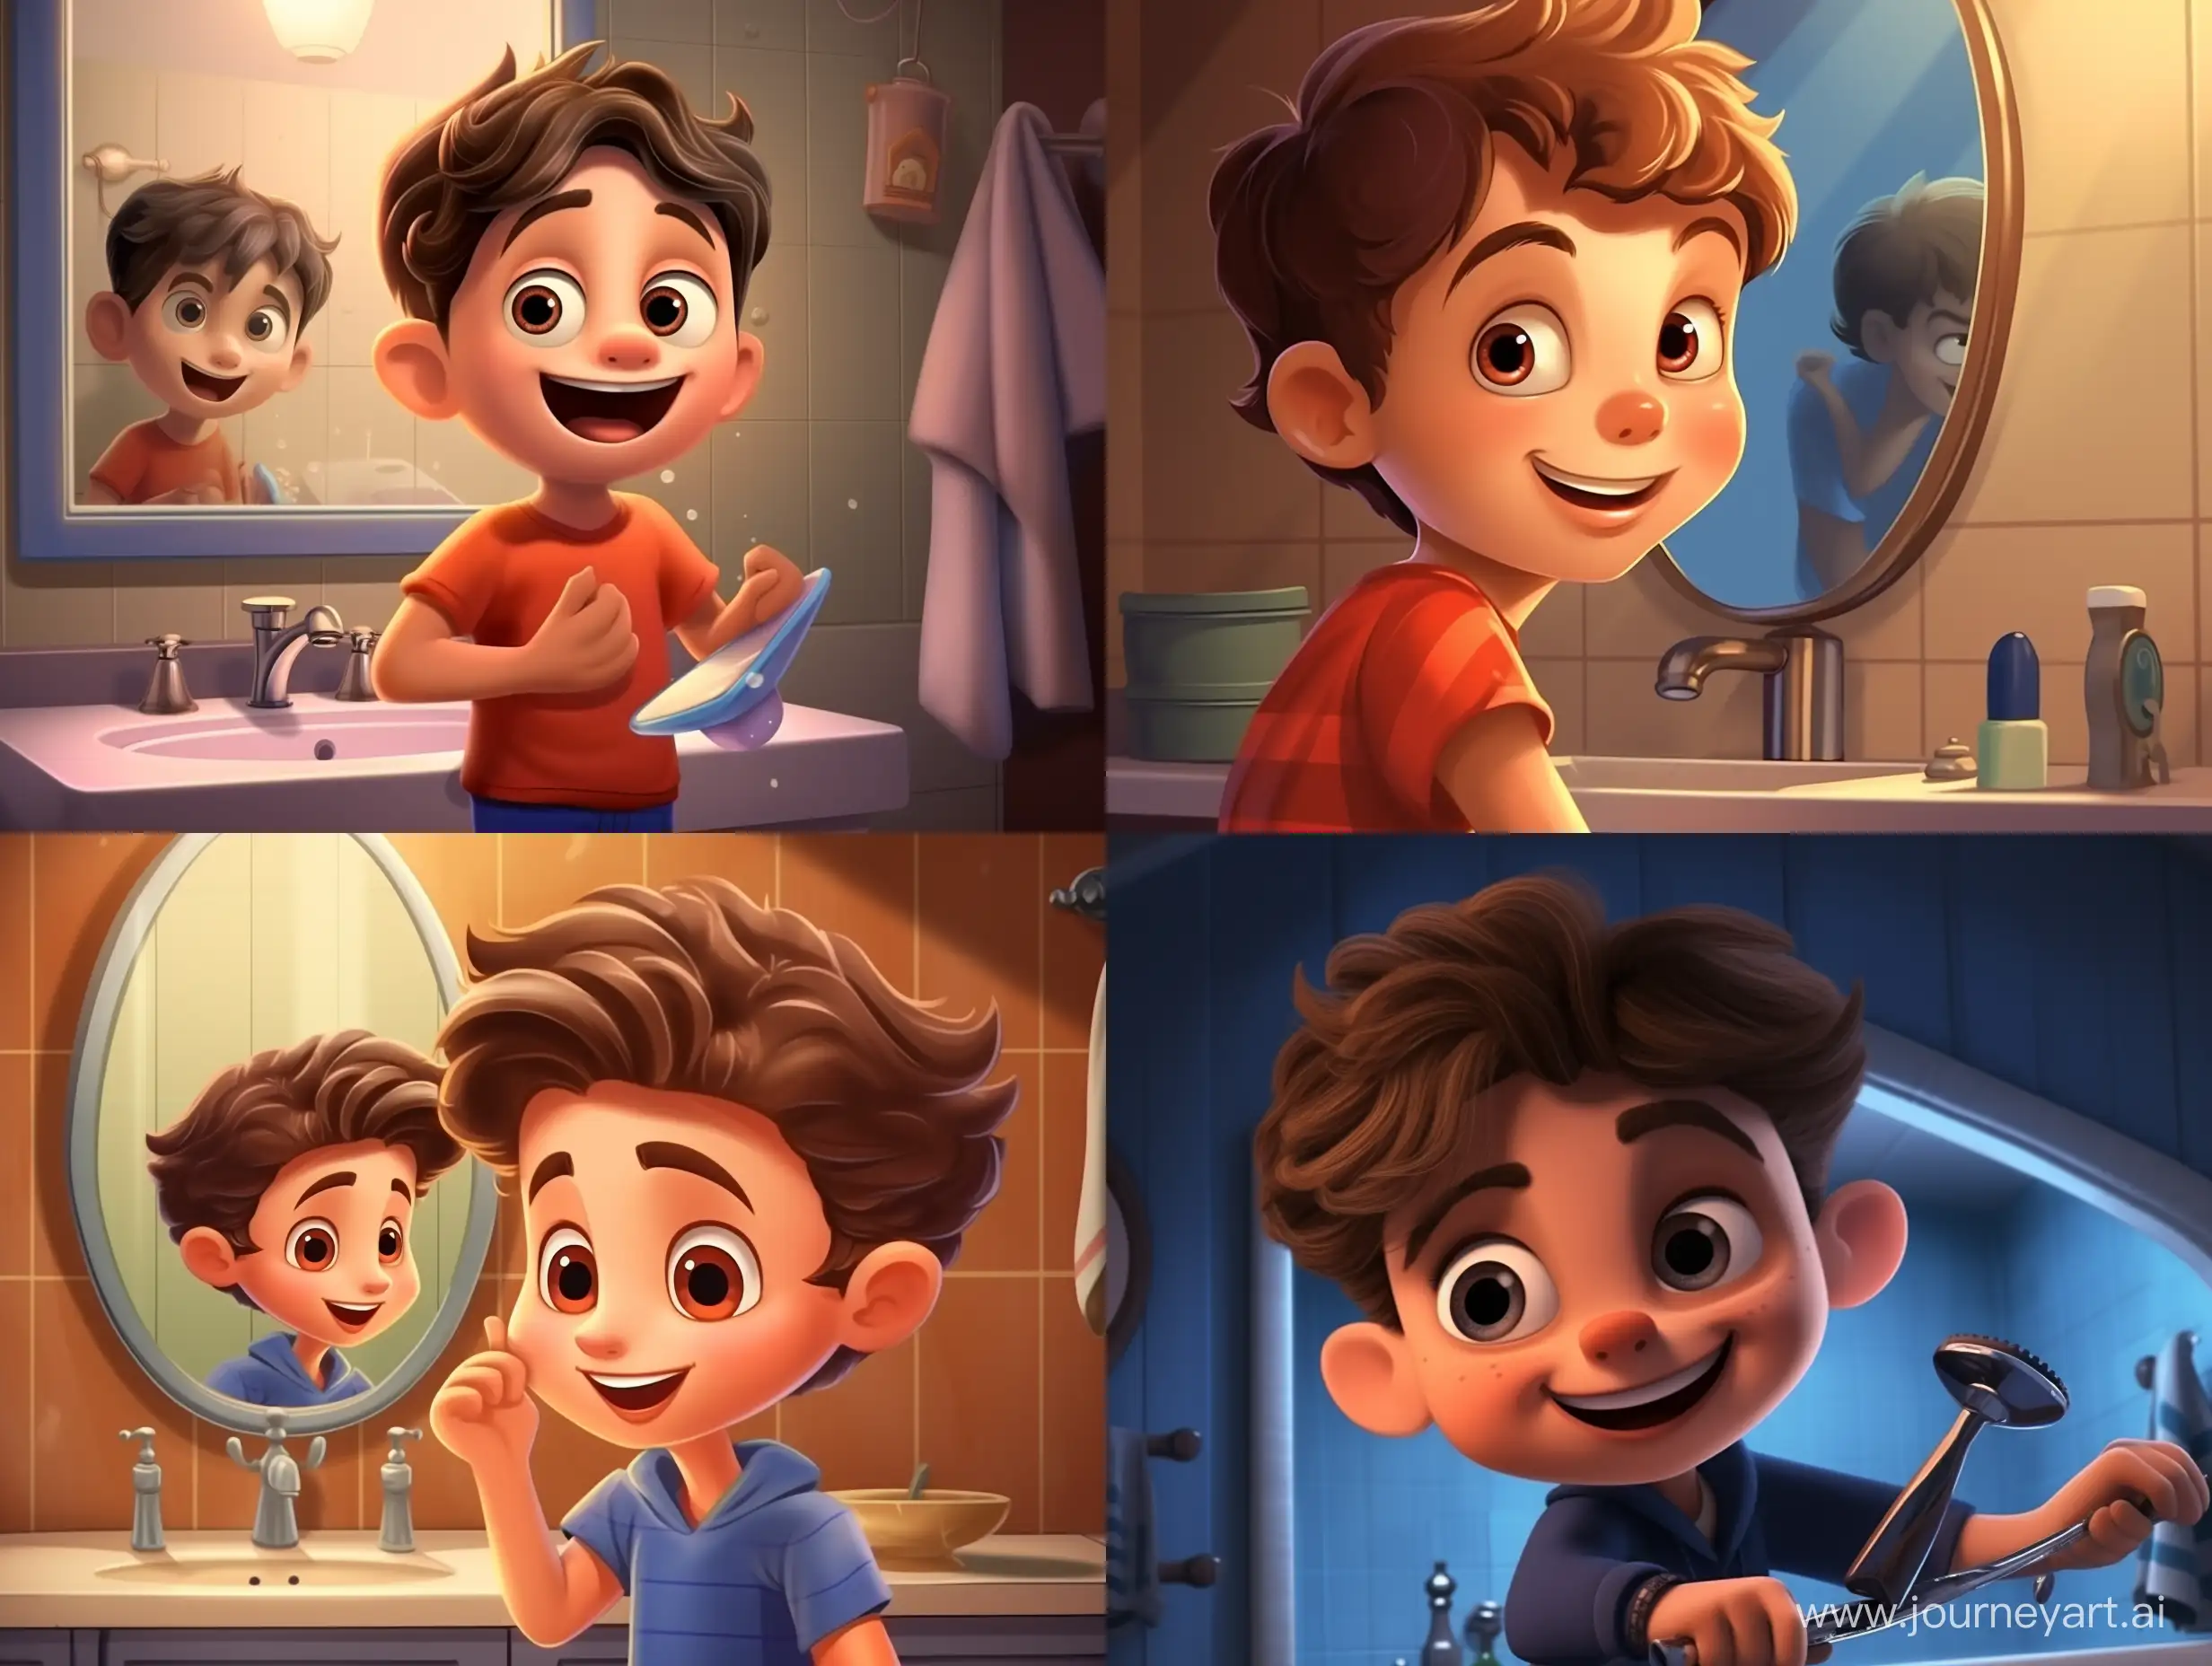 Adorable-Boys-DIY-Haircut-in-PixarStyle-Bathroom-Scene